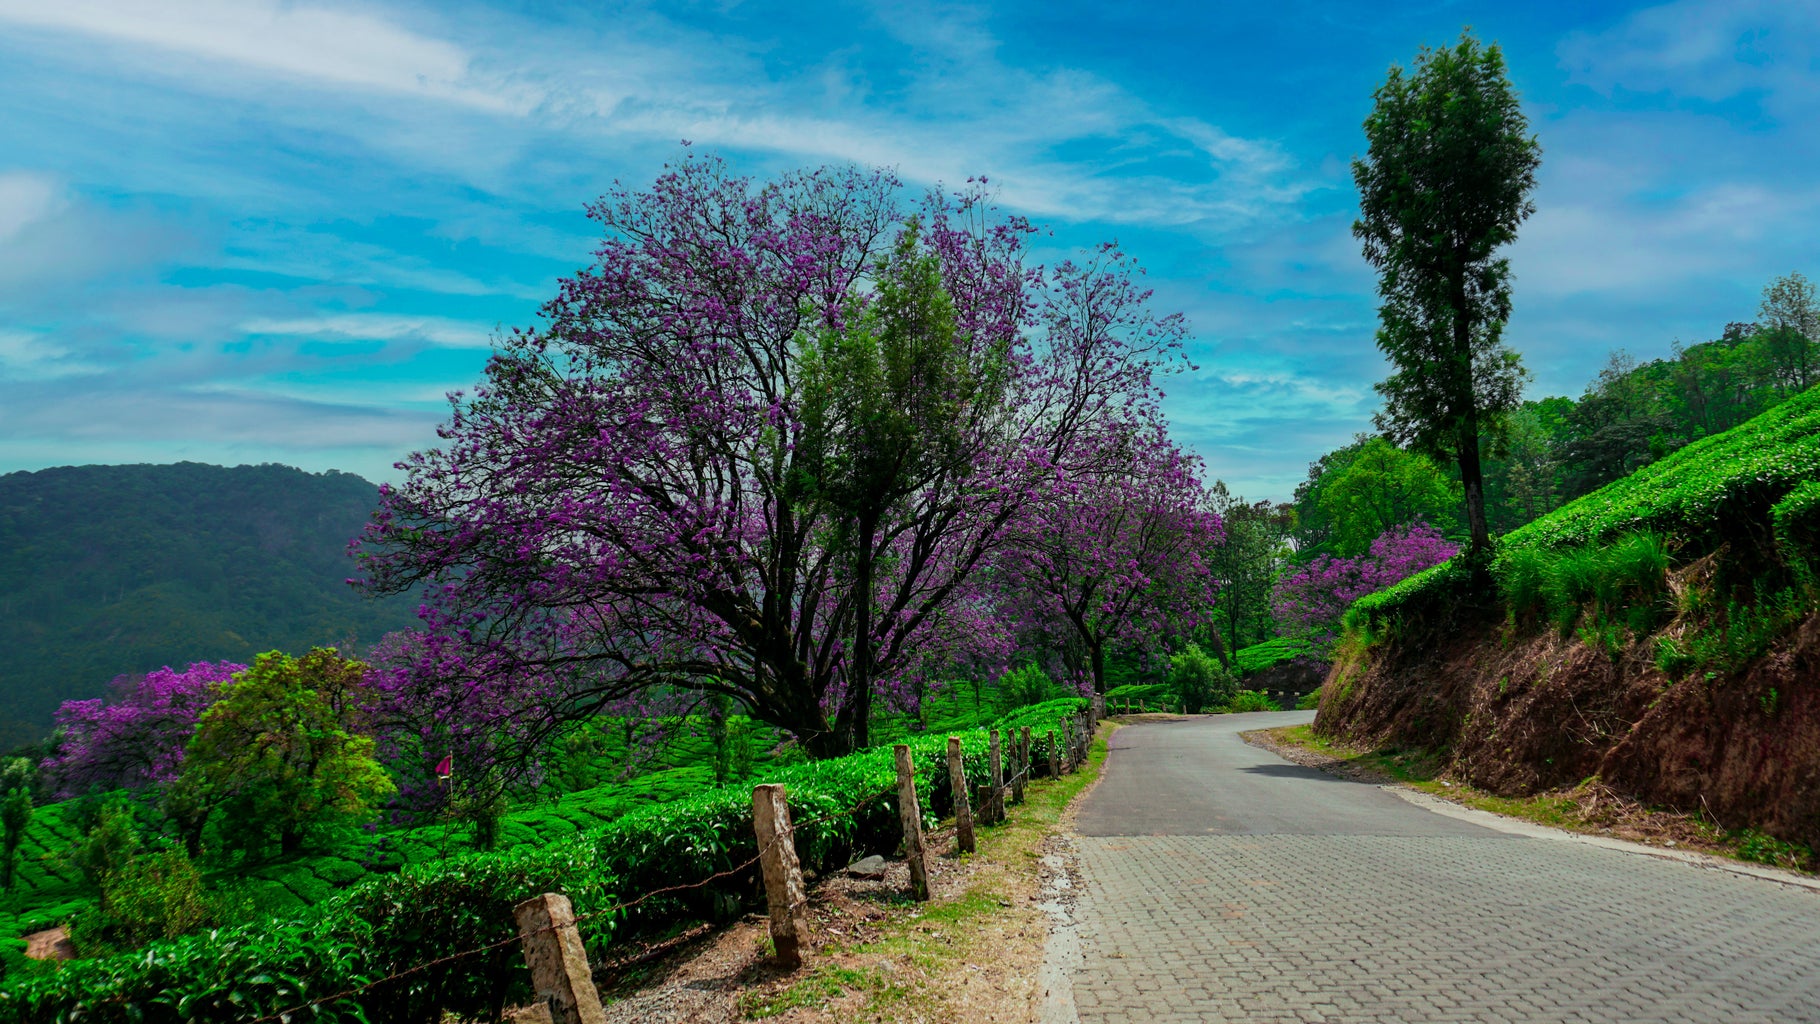 A photo of a blossoming tree and greenery in Munnar, Kerala, India